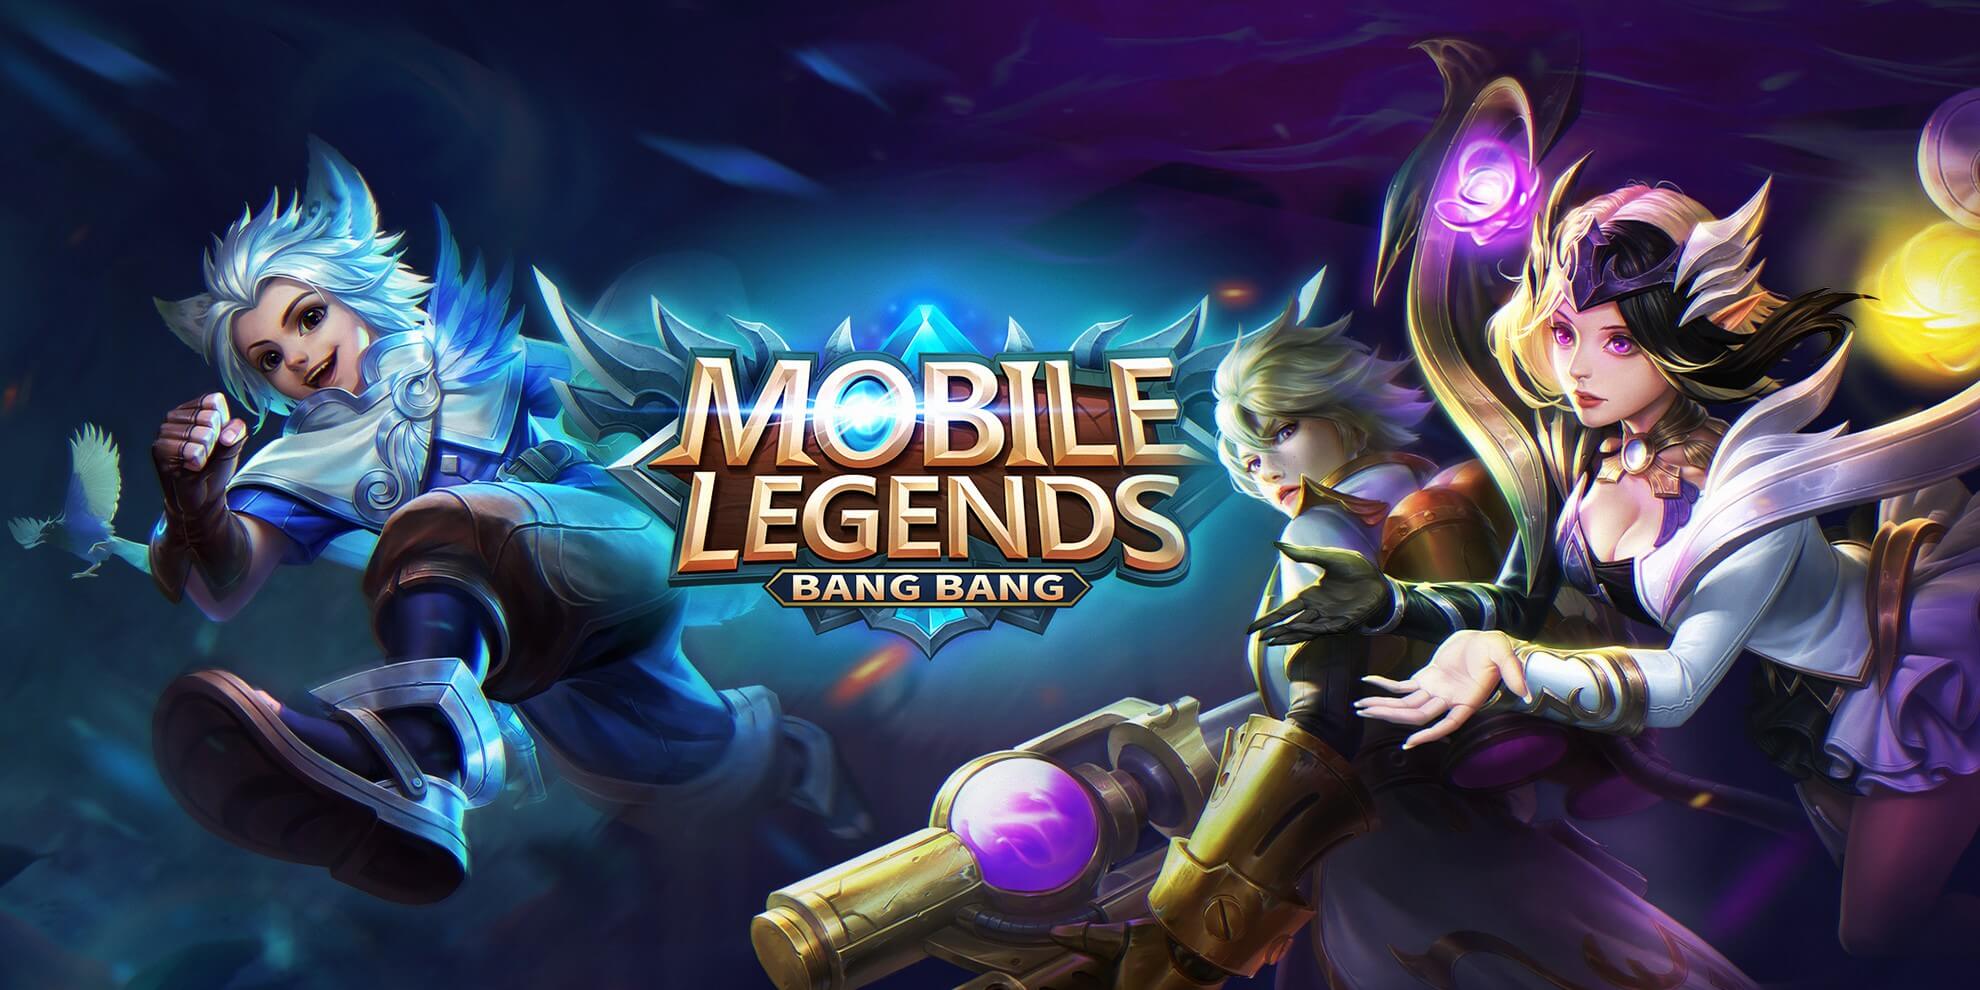 mobile legends bang bang vng game moba hap dan